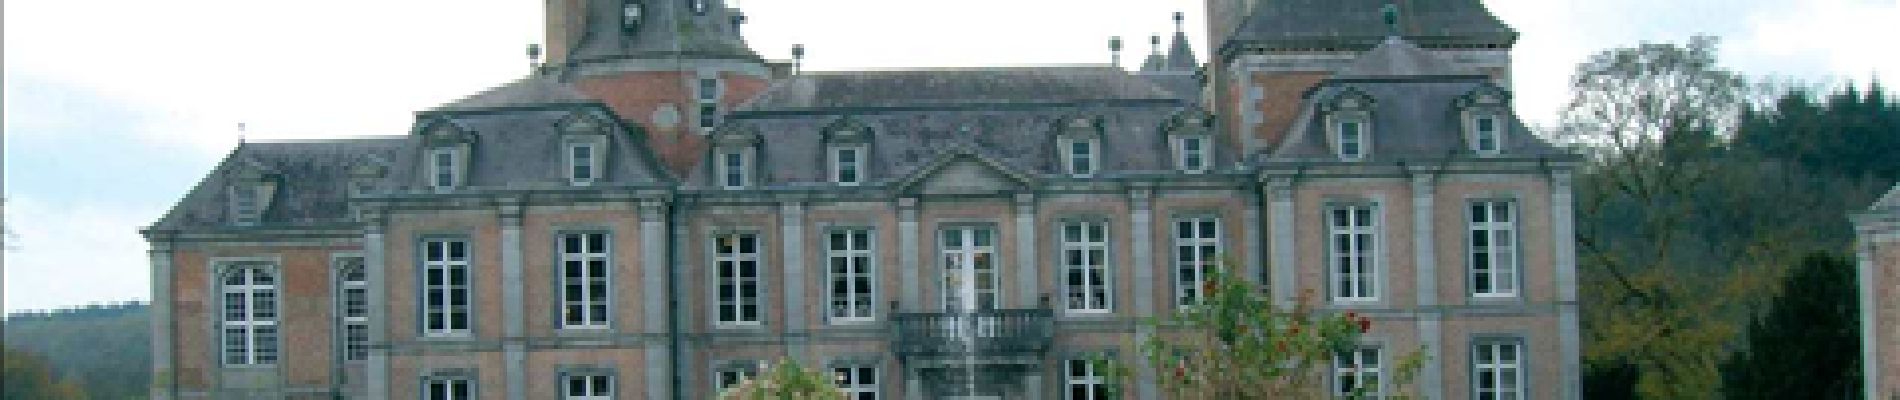 Punto di interesse Modave - Château de Modave - Photo